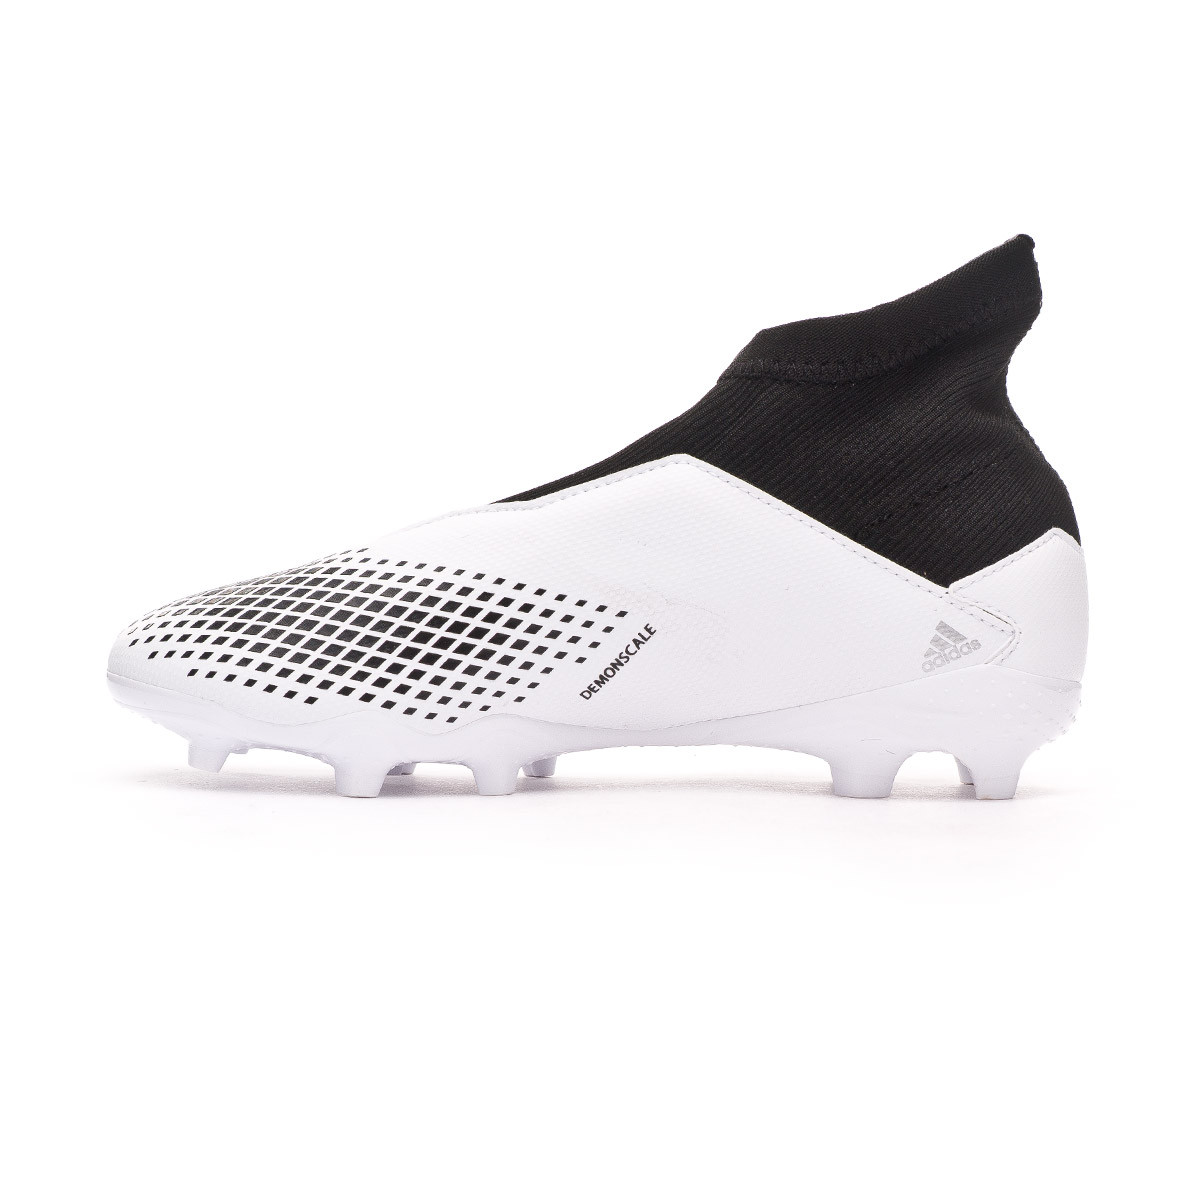 size 5 adidas predator football boots